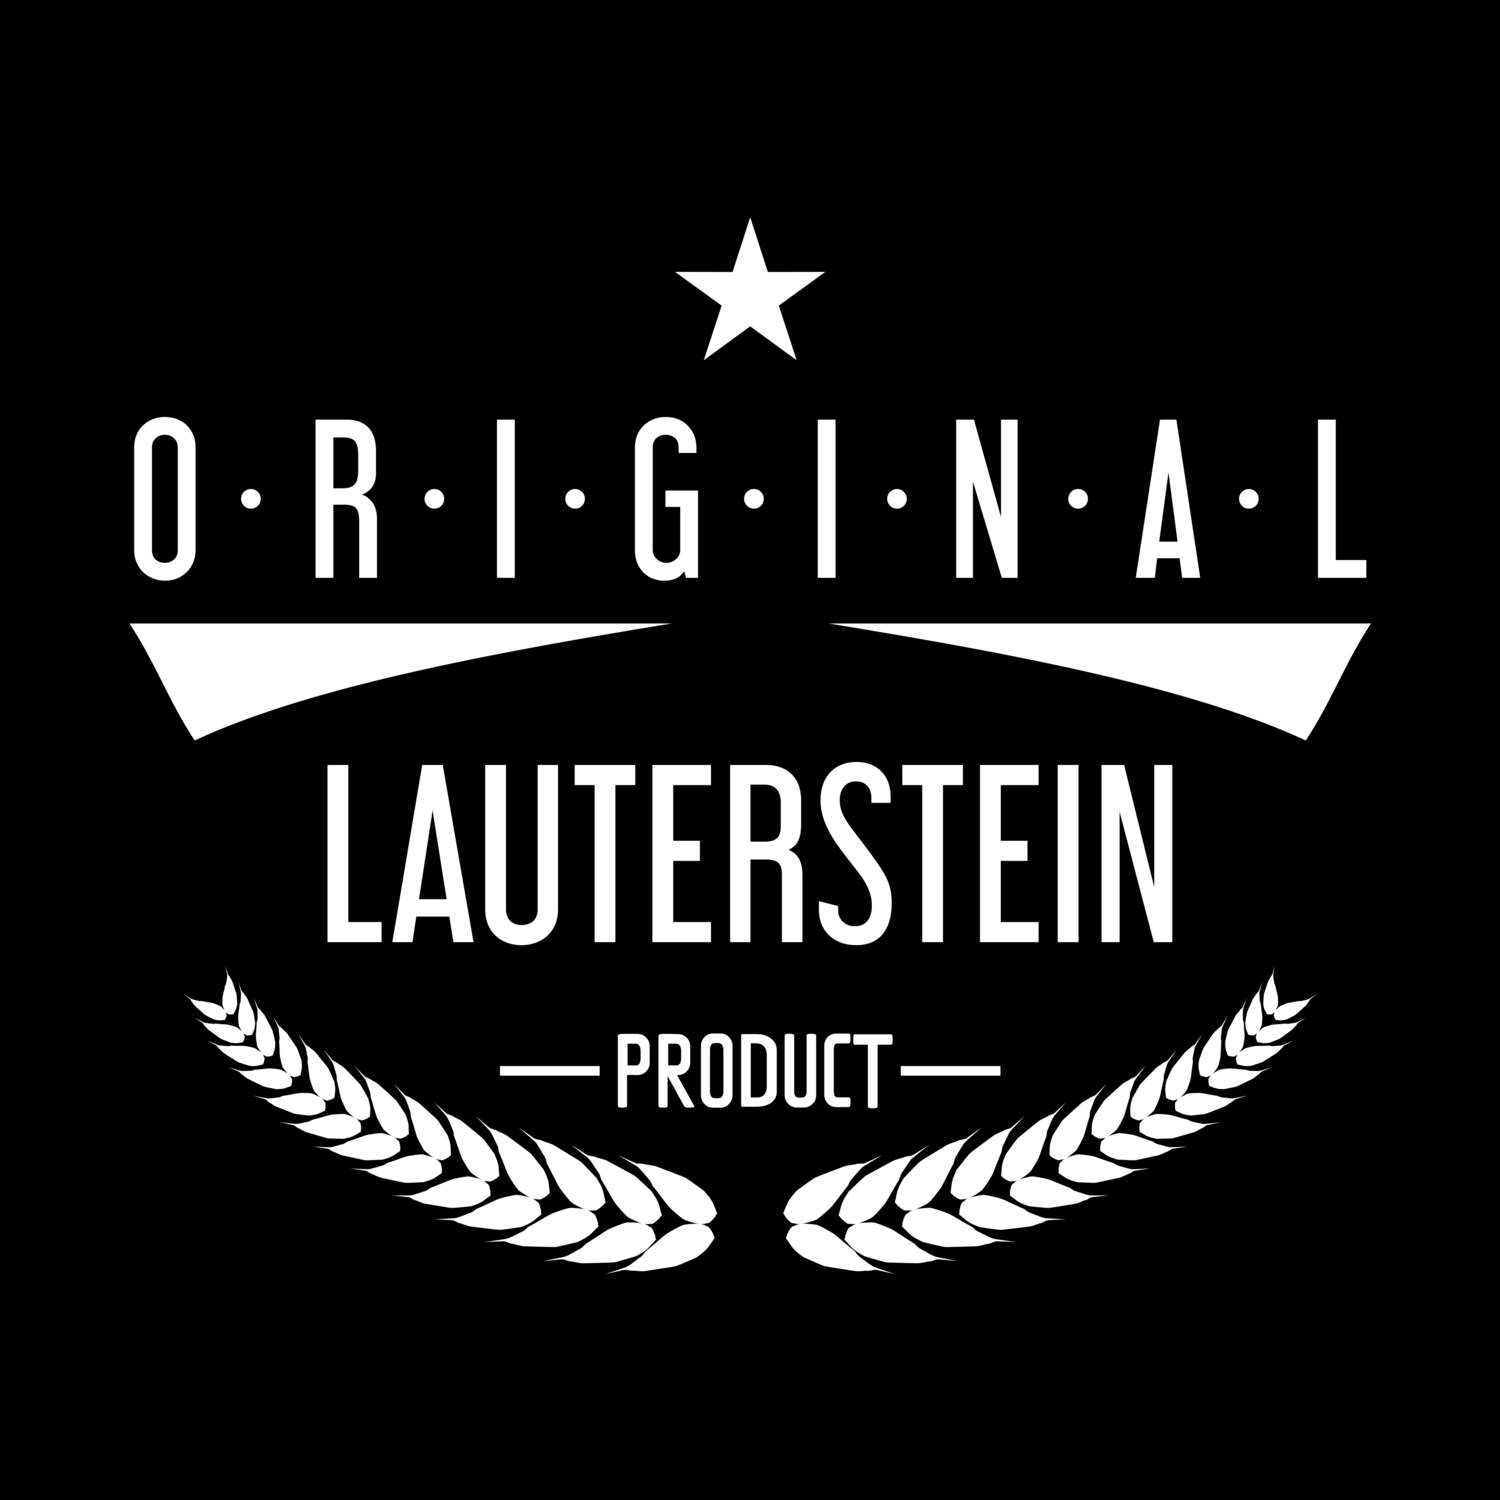 Lauterstein T-Shirt »Original Product«